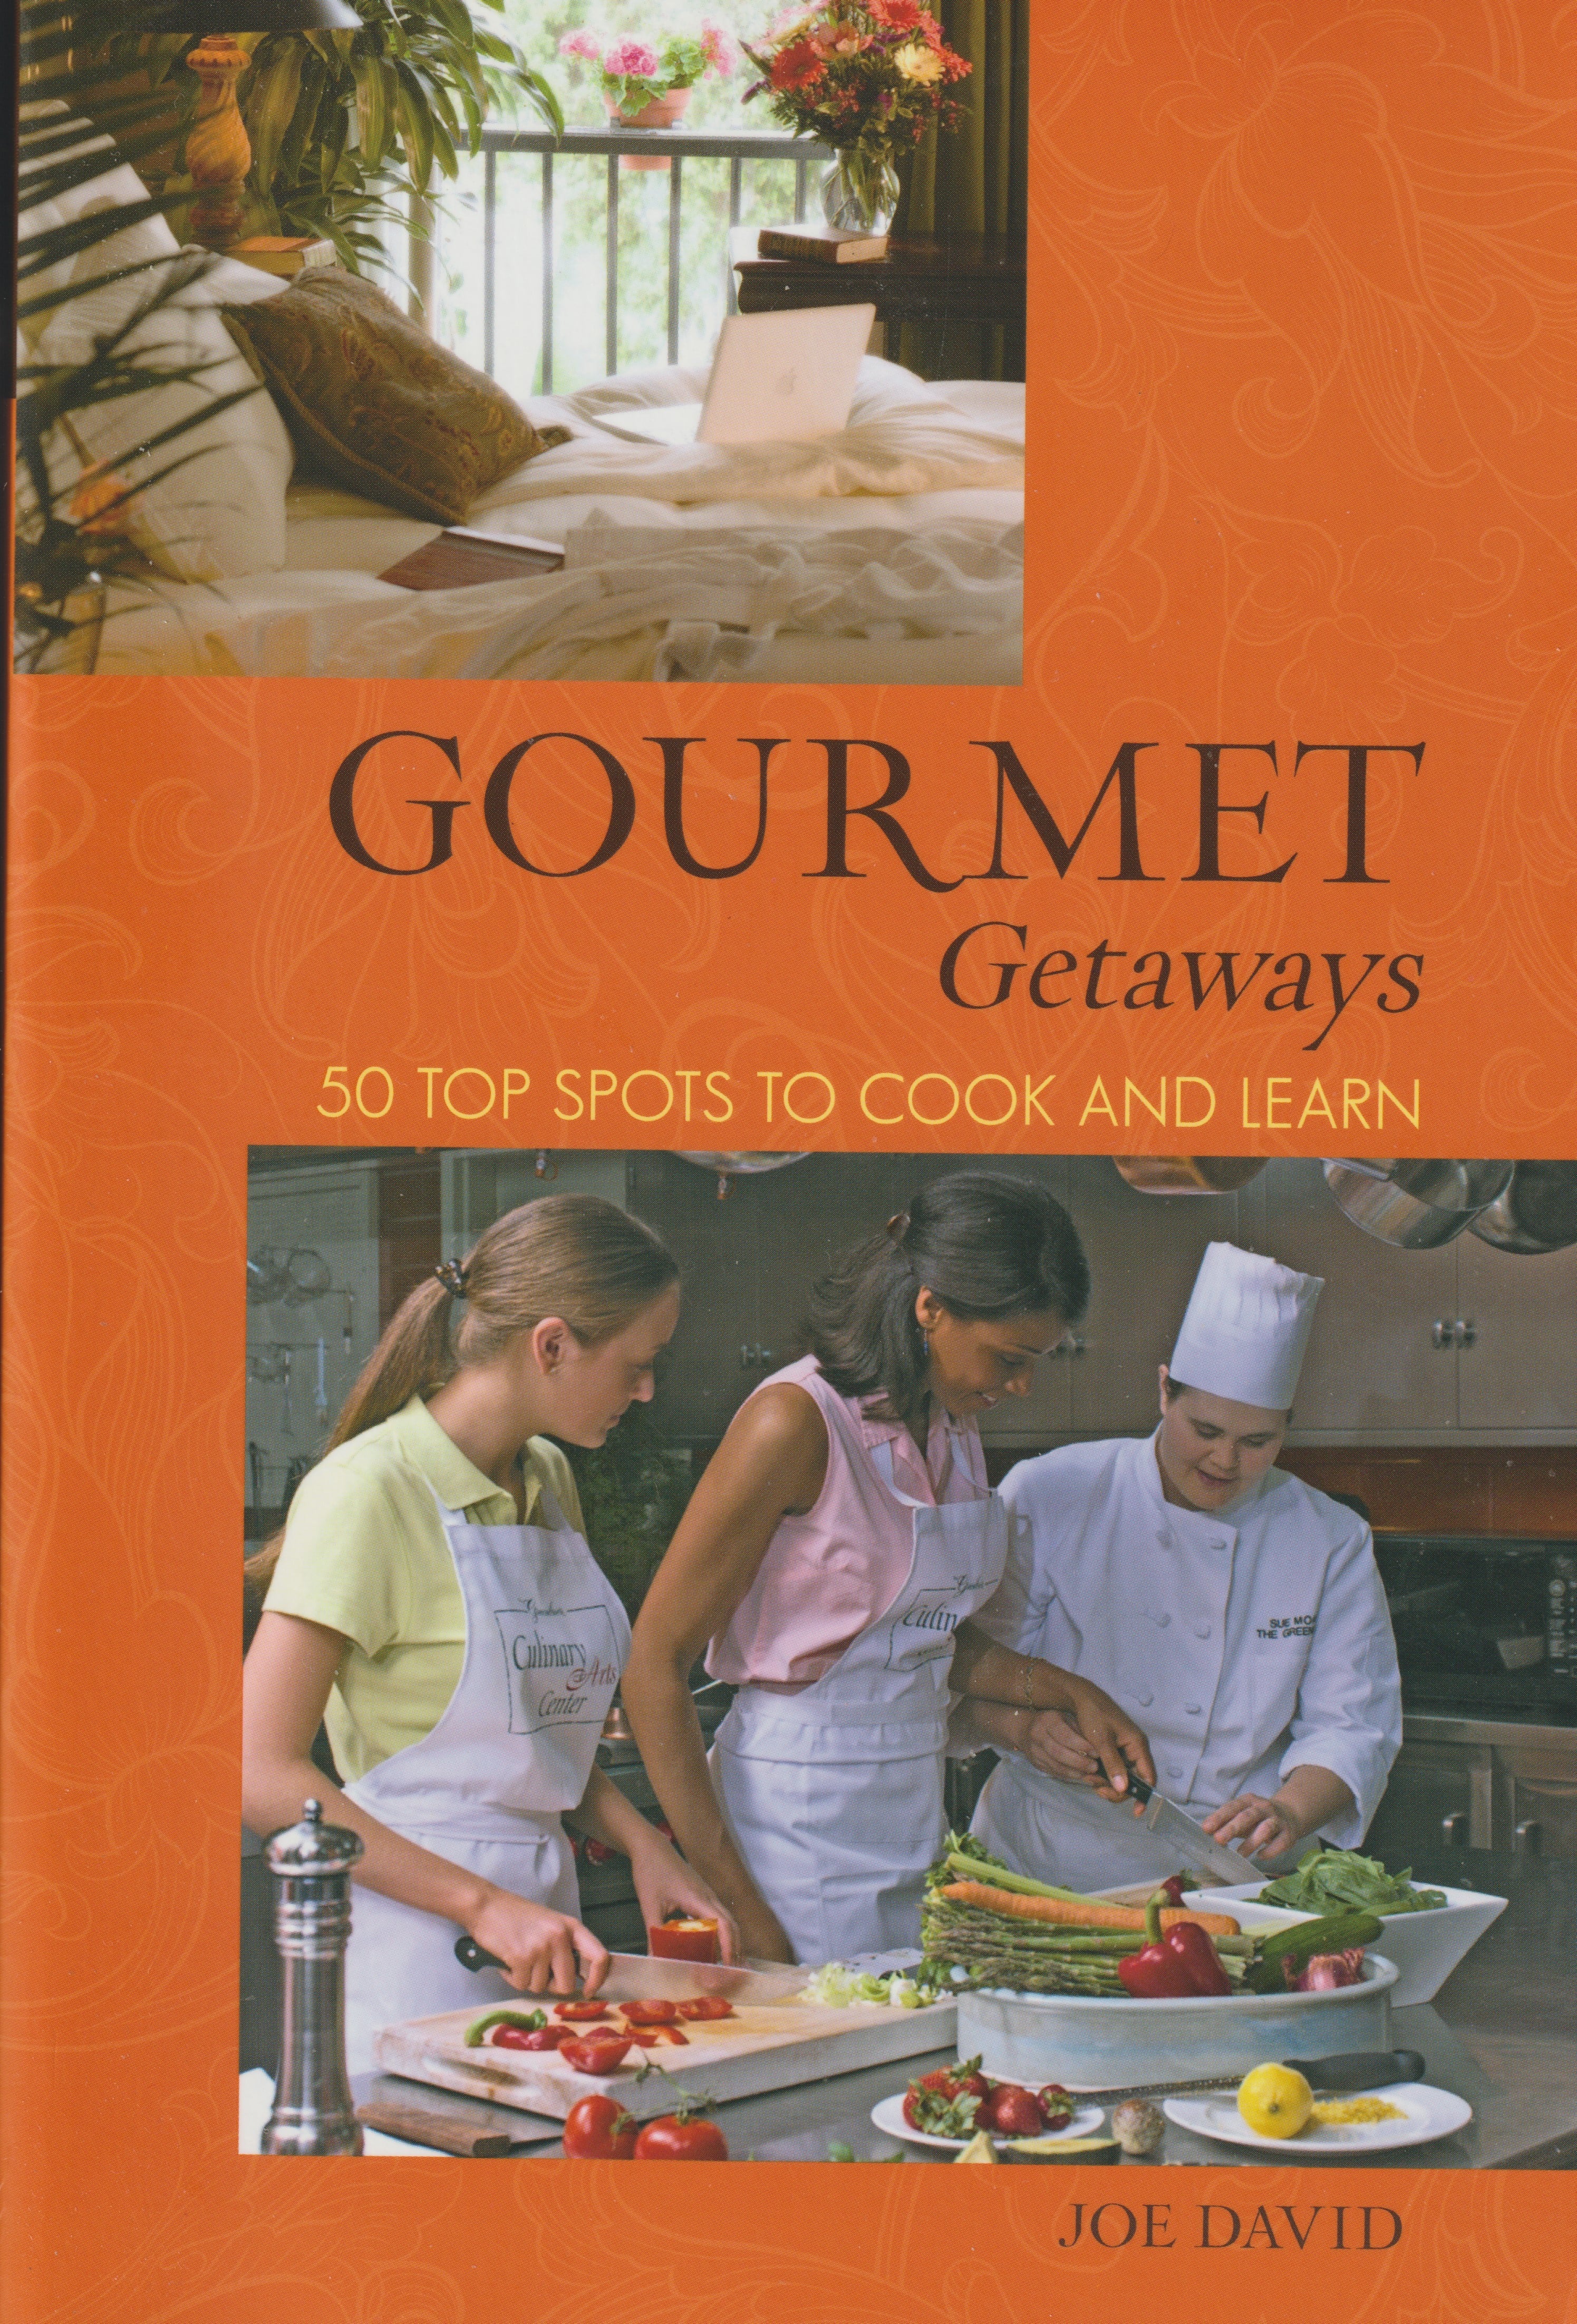 Joe David's Gourmet Getaways